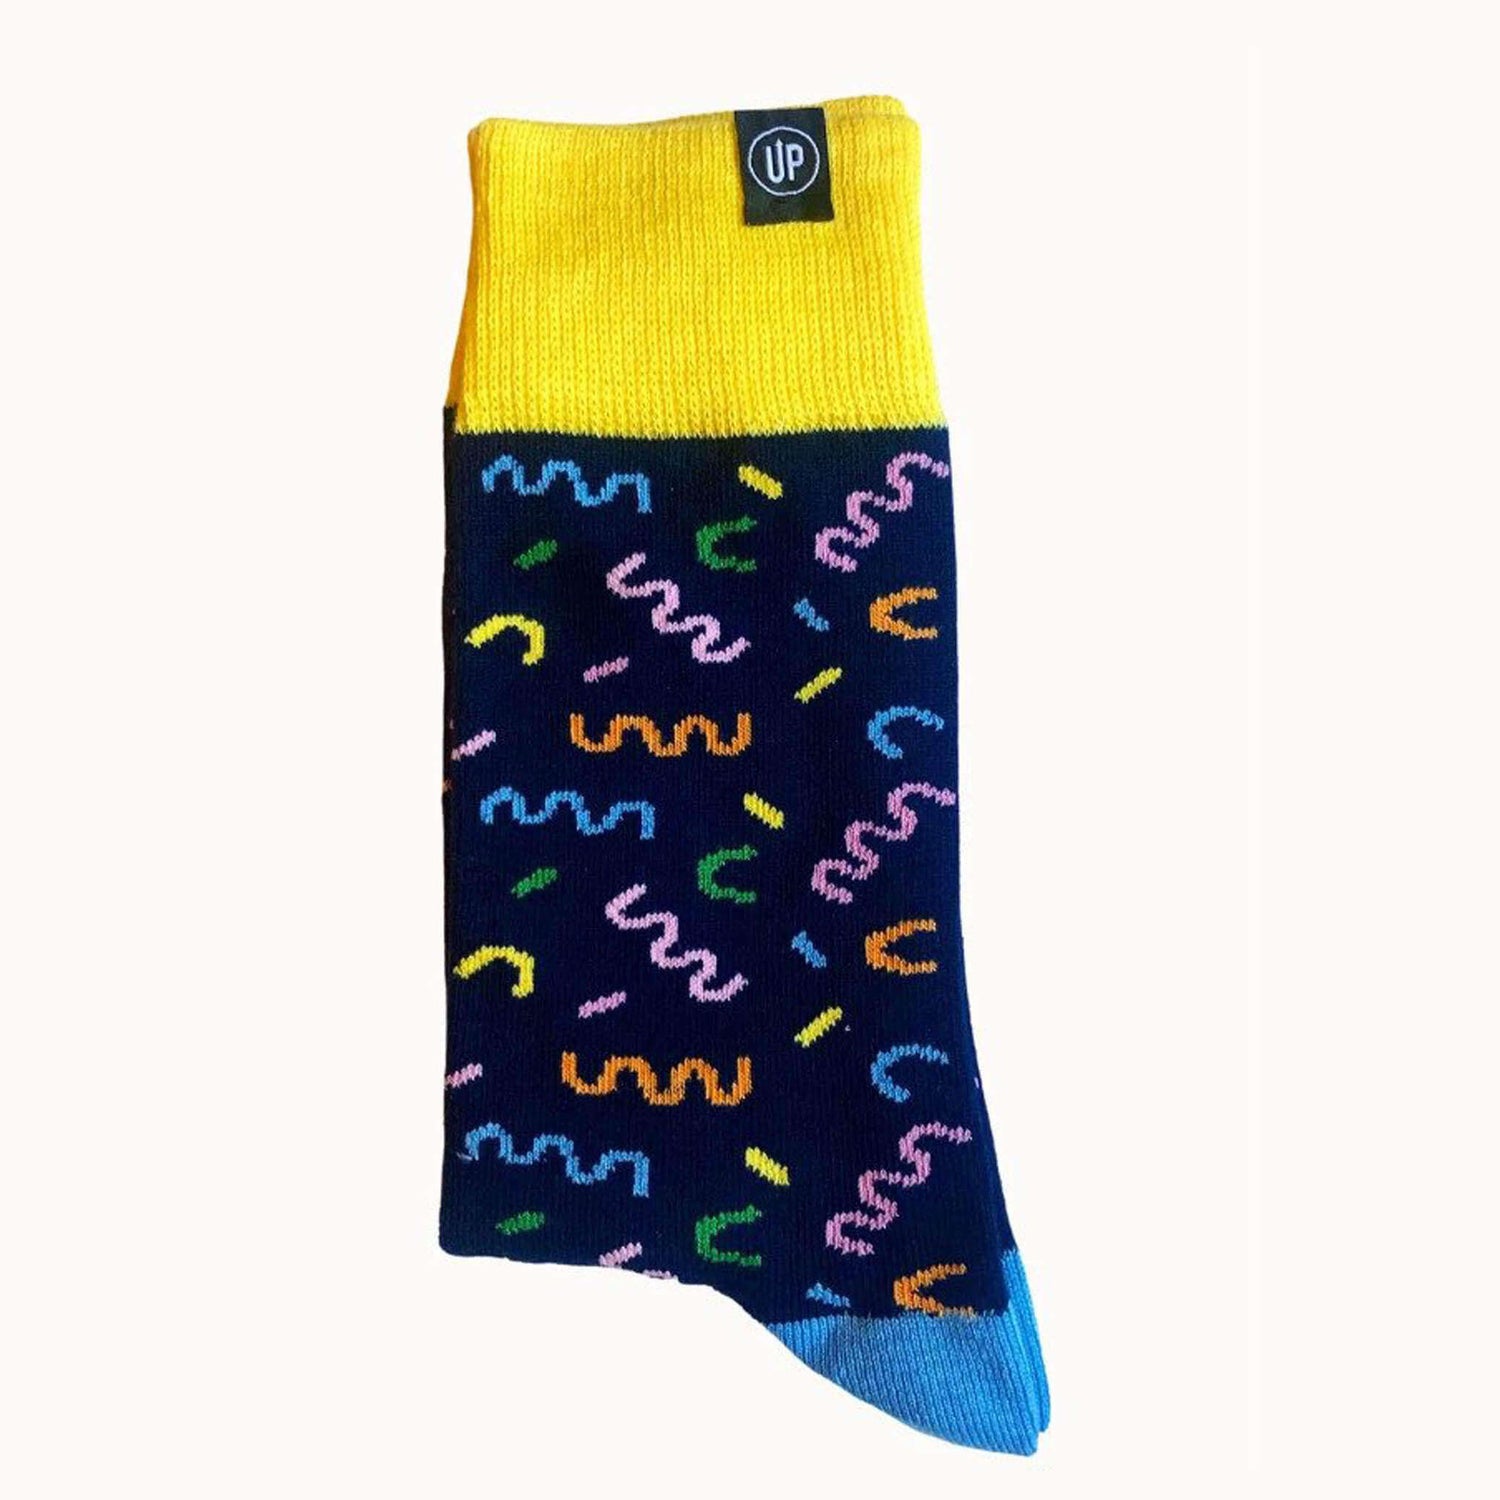 Funfetti Colourful Socks Australia